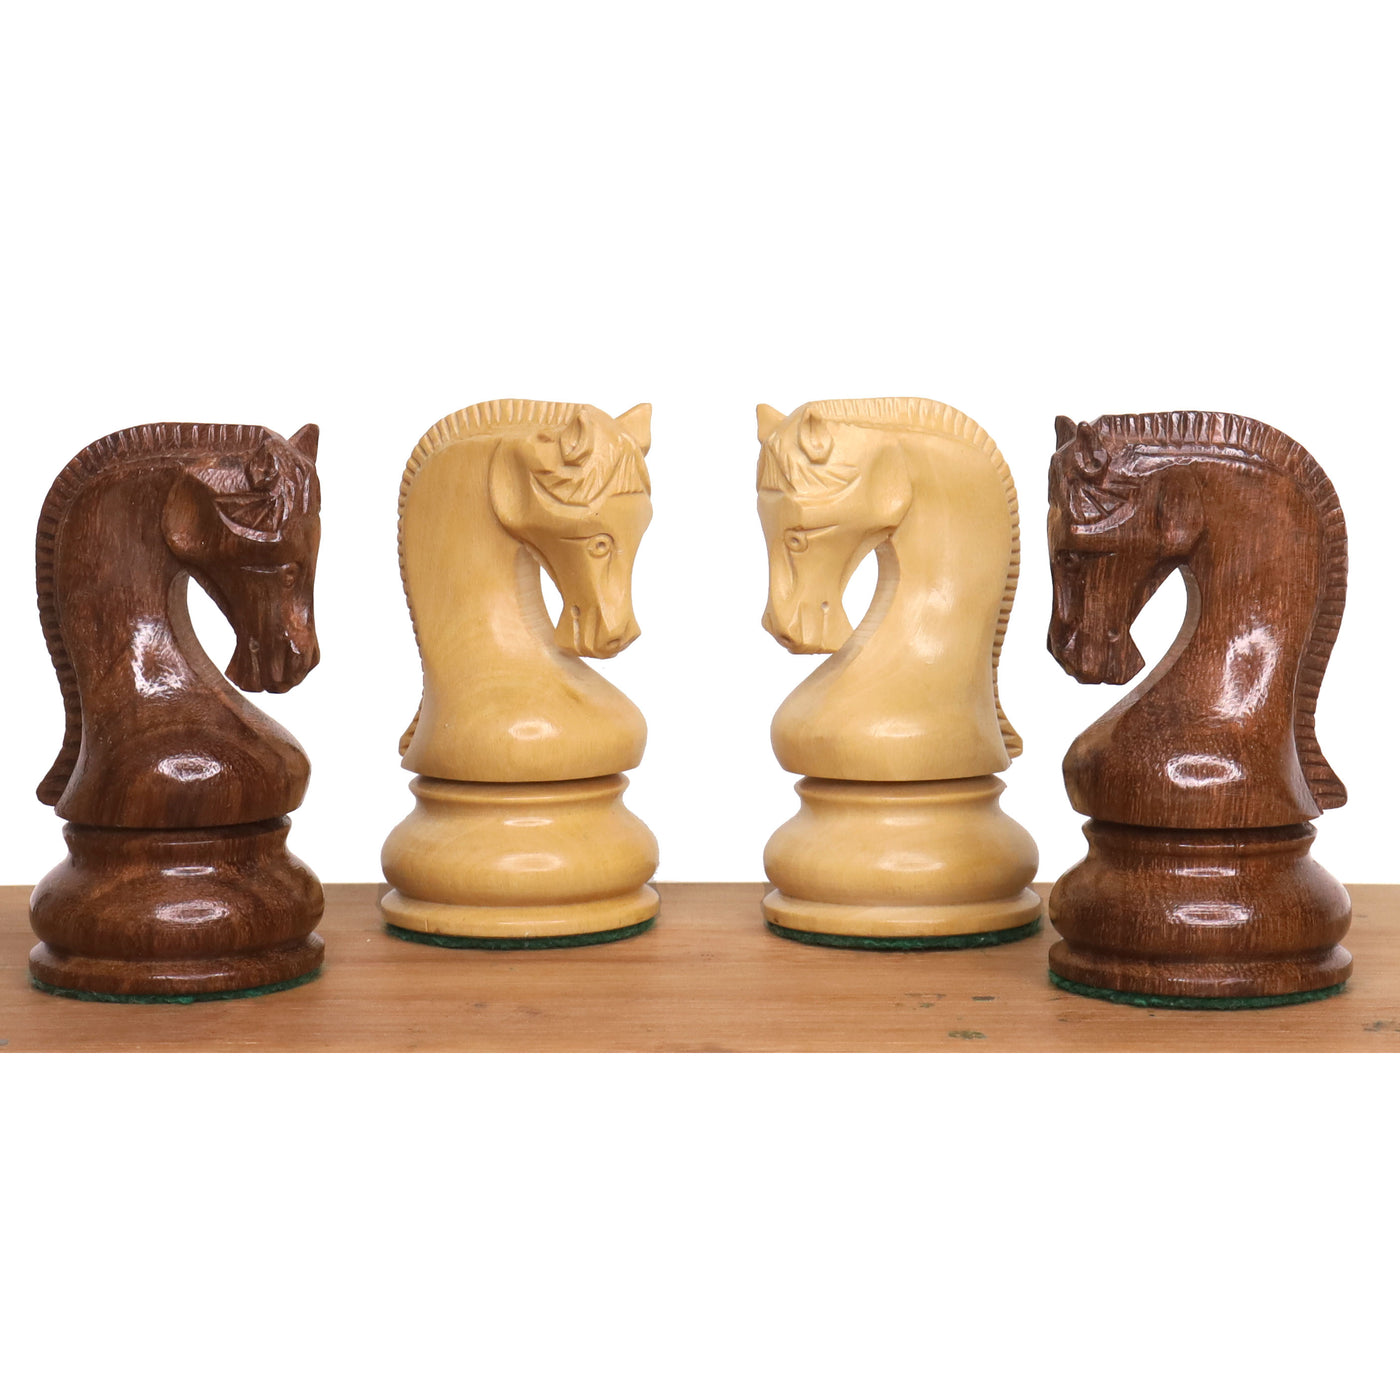 Leningrad Staunton Chess Pieces Only Set - Golden Rosewood & Boxwood - 4" King